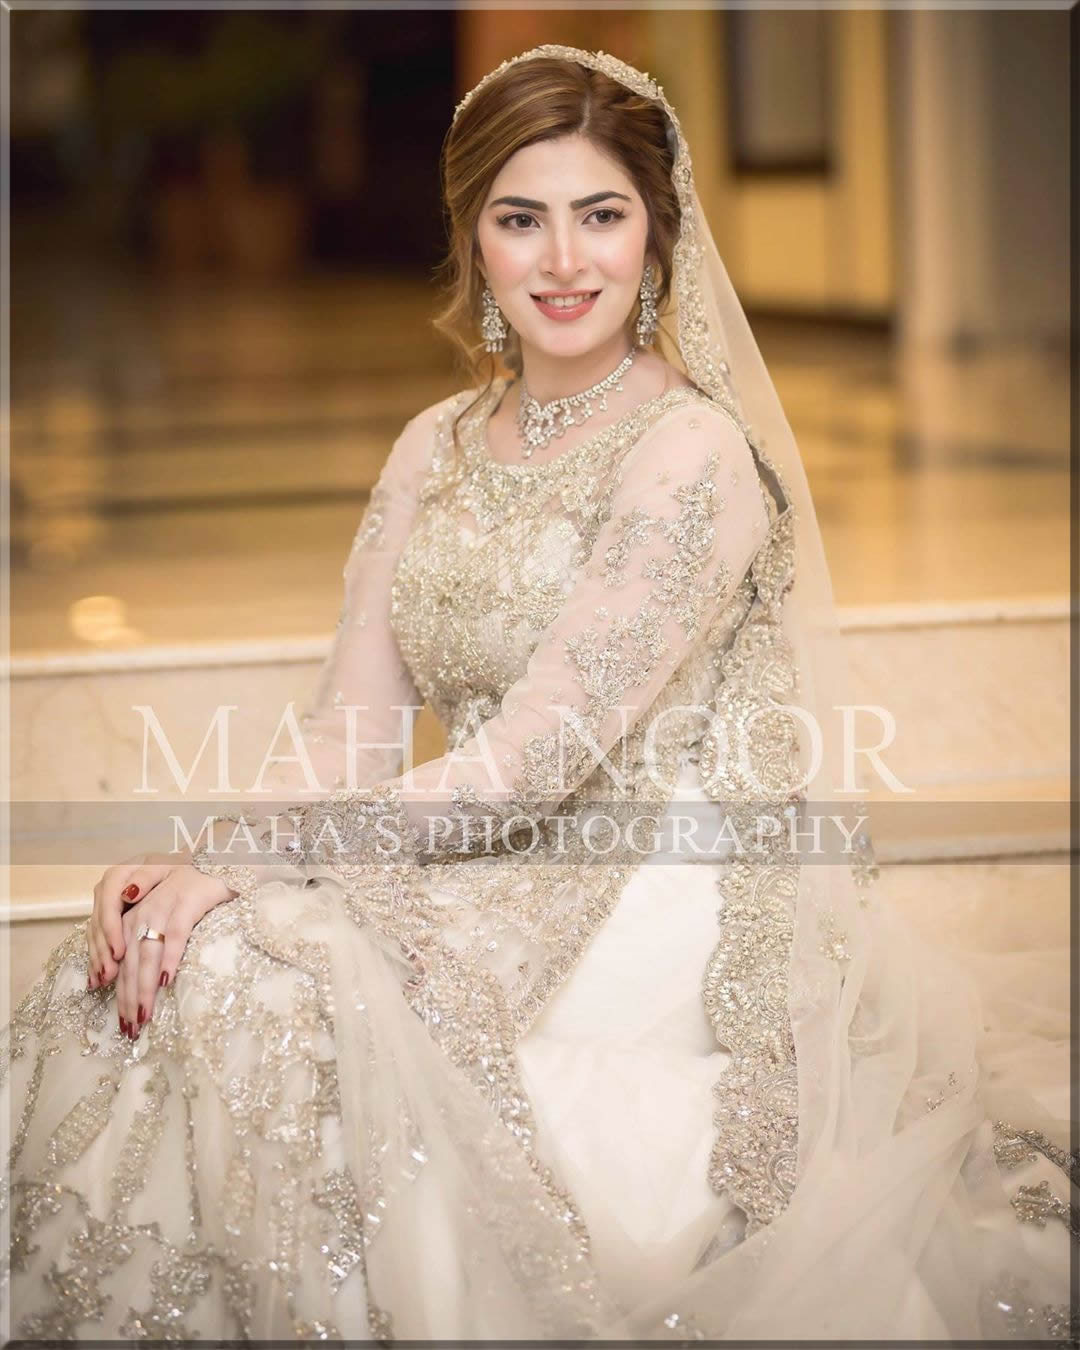 Naimal khawar amazing wedding dress